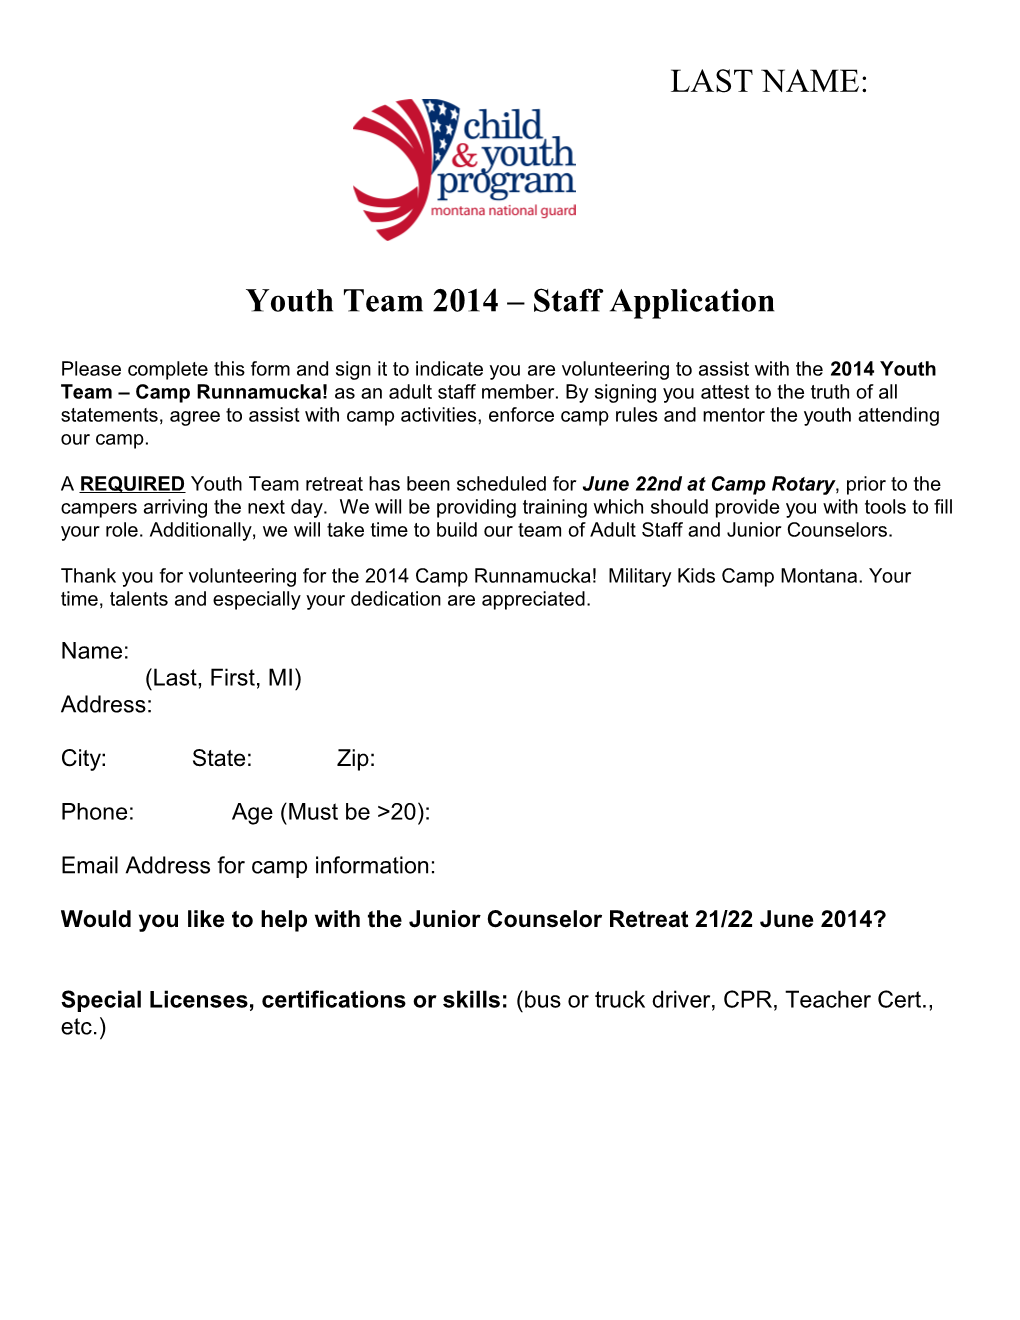 Youth Team 2014 Staff Application